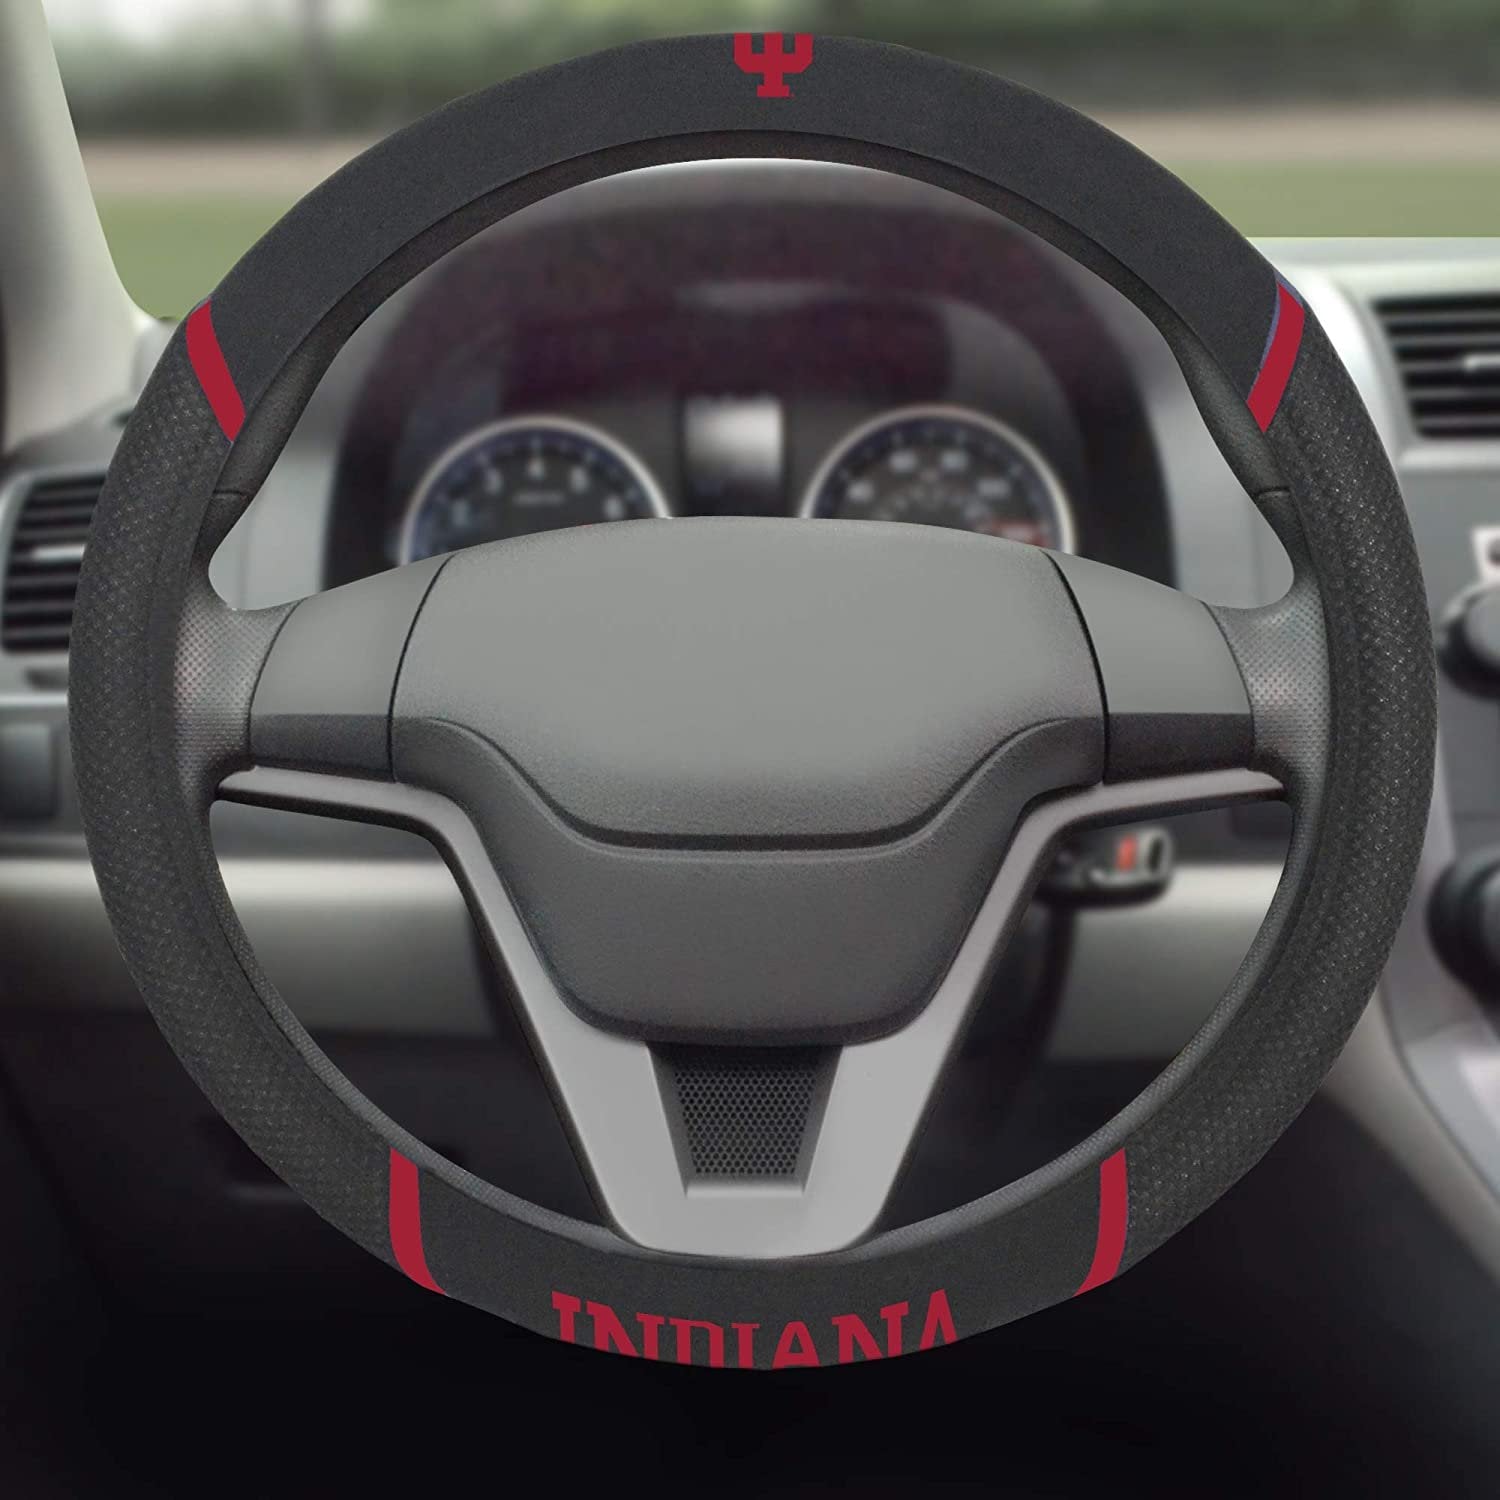 Indiana Hoosiers Steering Wheel Cover Premium Embroidered Black 15 Inch University